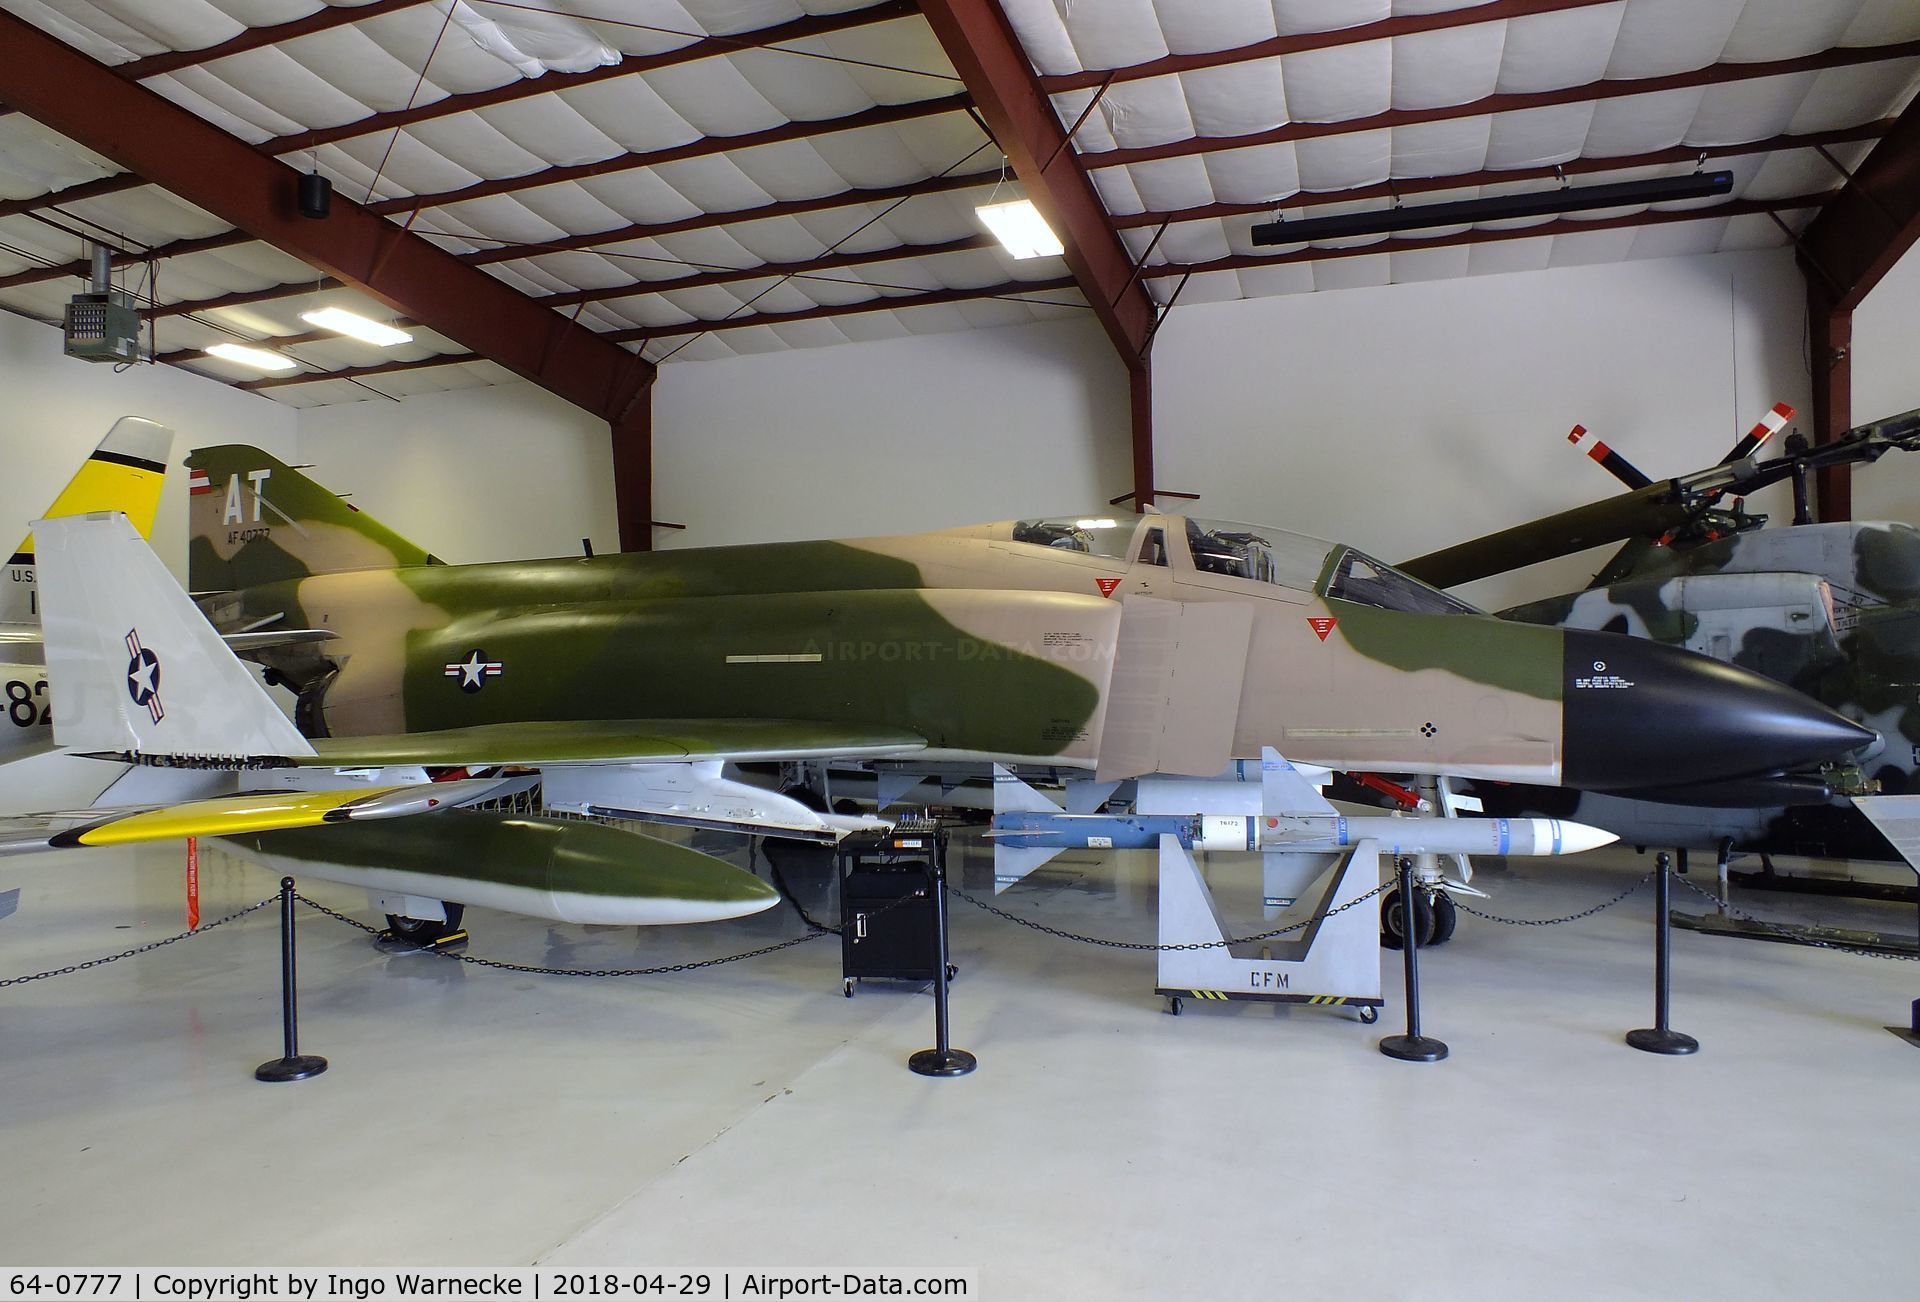 64-0777, 1964 McDonnell F-4C Phantom II C/N 1080, McDonnell F-4C Phantom II at the Cavanaugh Flight Museum, Addison TX